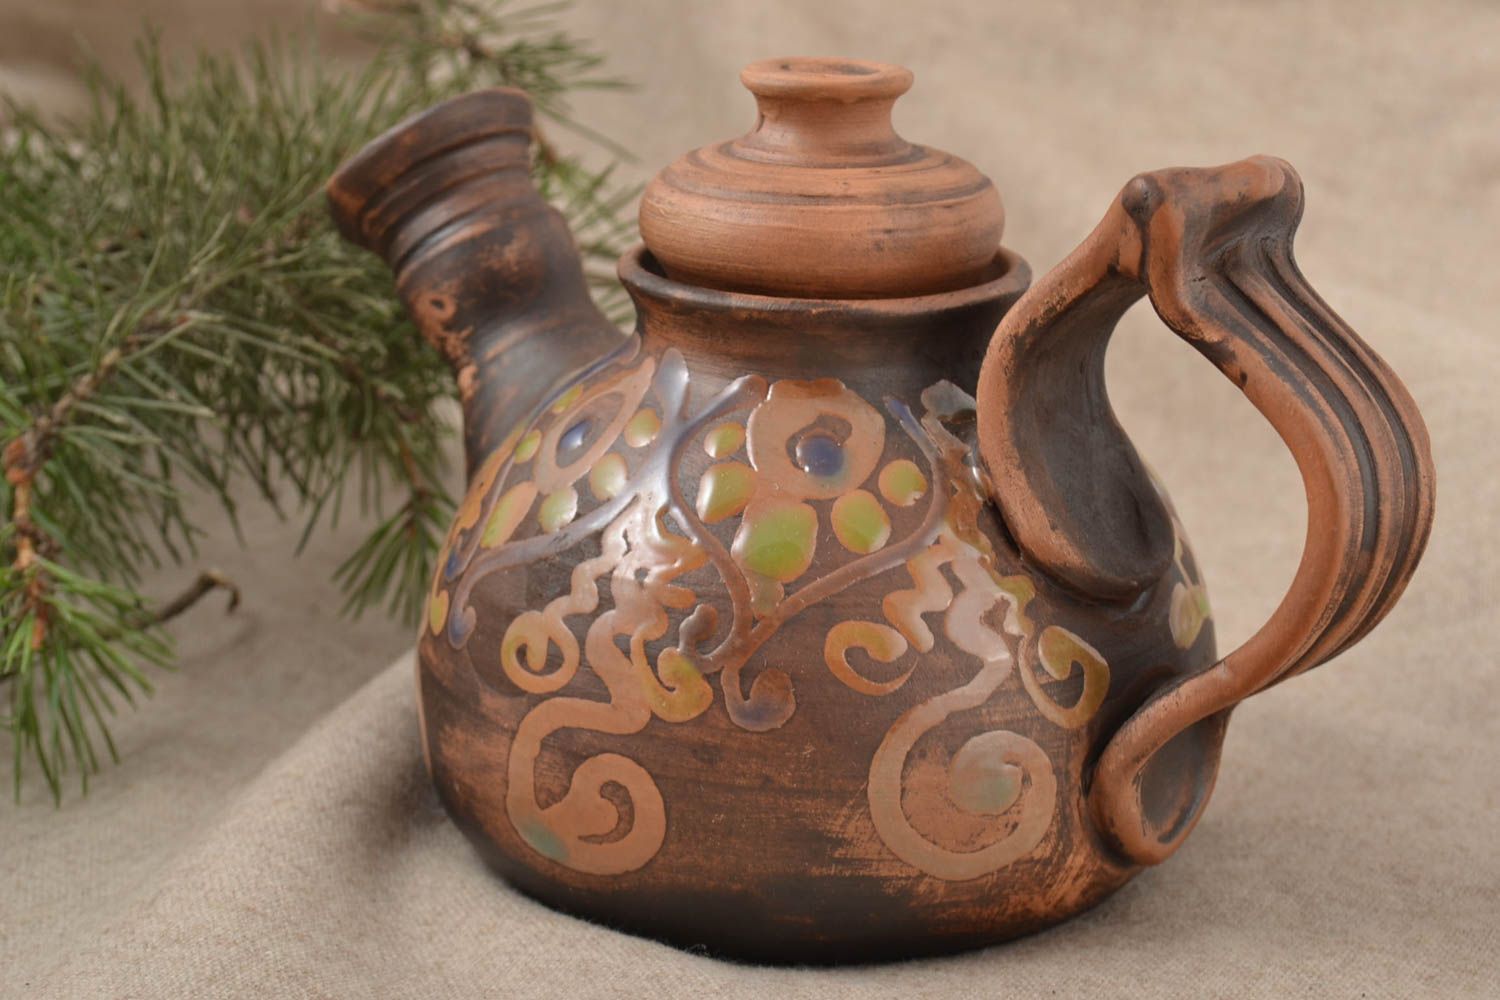 Beautiful handmade ceramic teapot designer clay teapot pottery works table decor photo 1